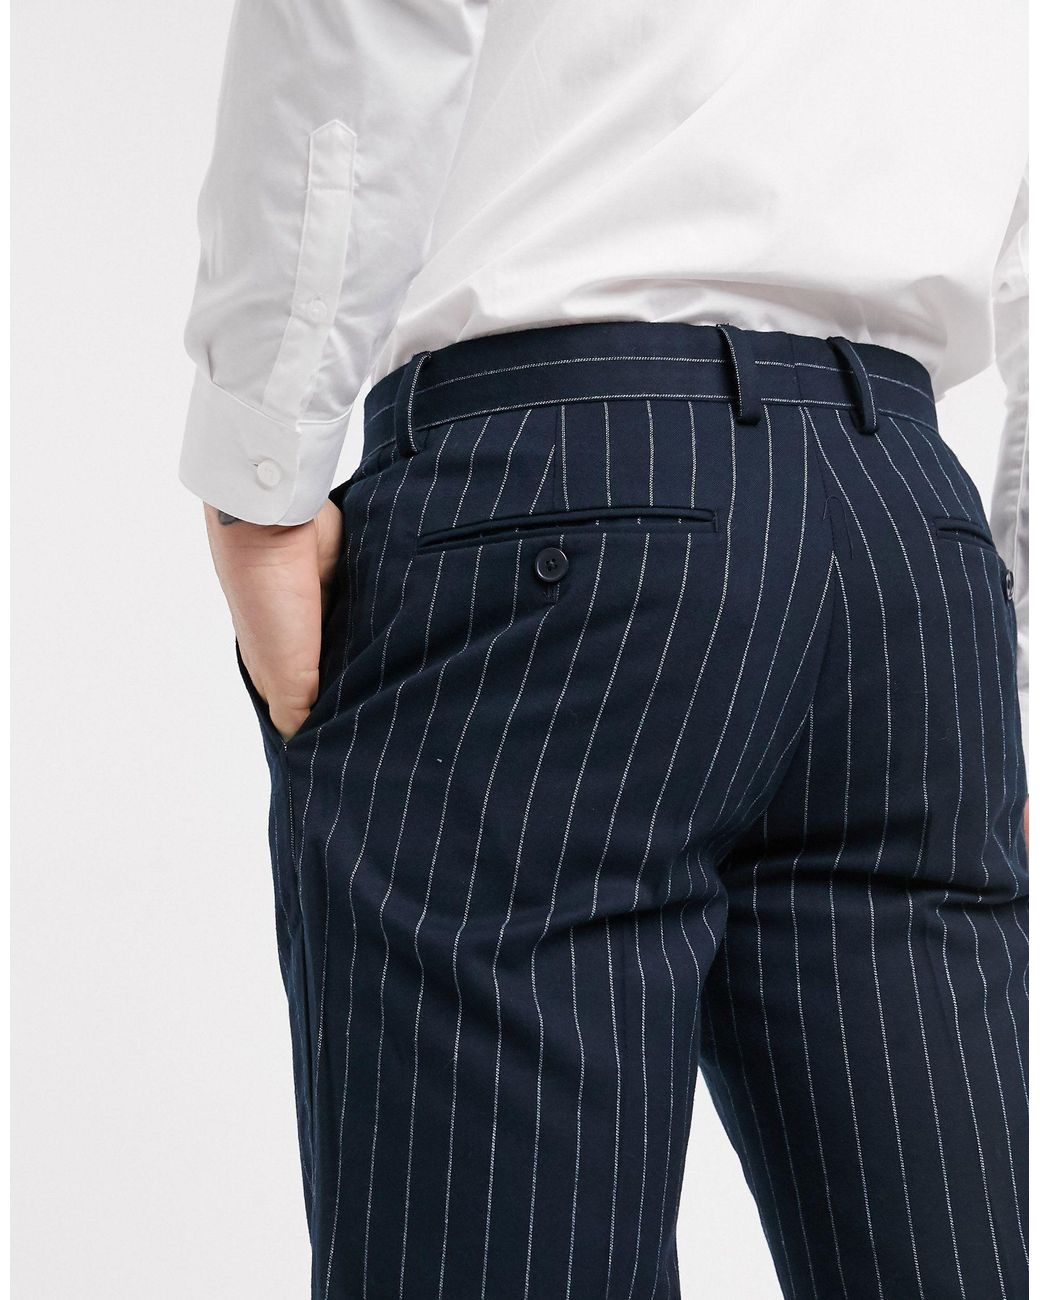 Original 1950s Men's Chalk Stripe Trousers - 34x30